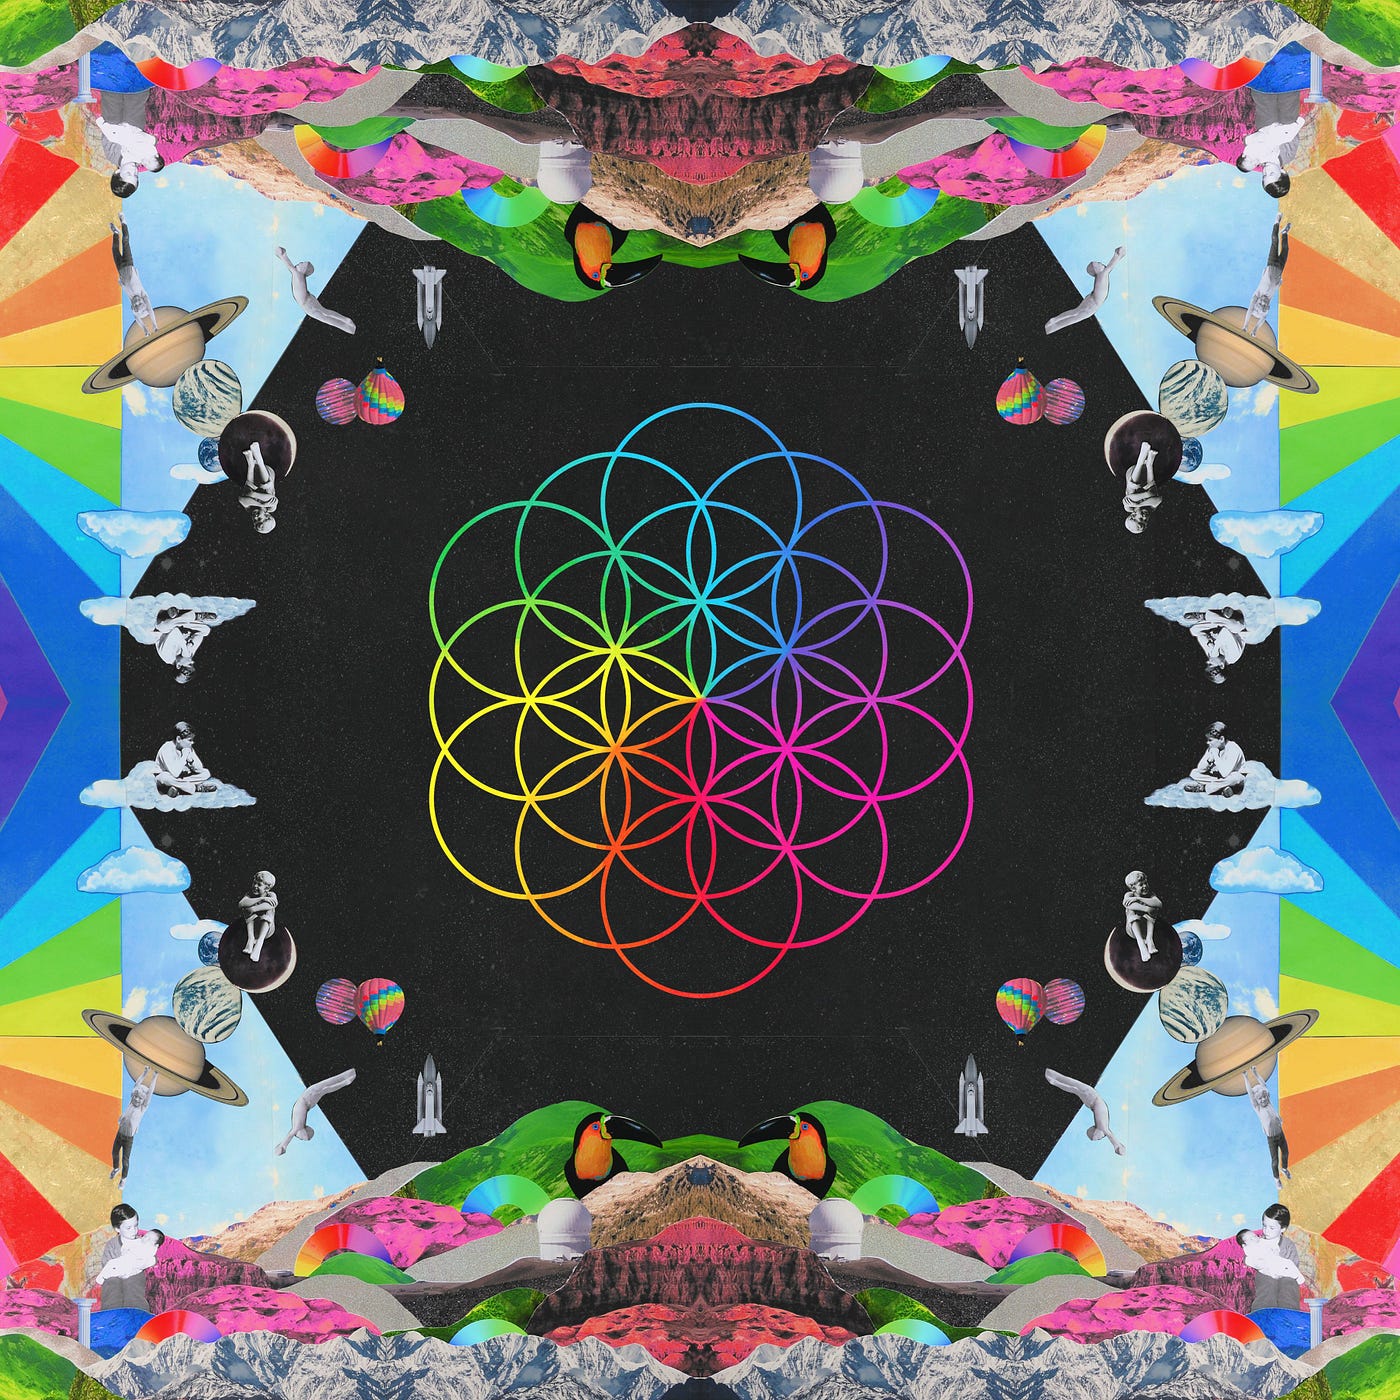 Coldplay, A Head Full of Dreams 'one week review' | by Edoardo Maggio |  Medium